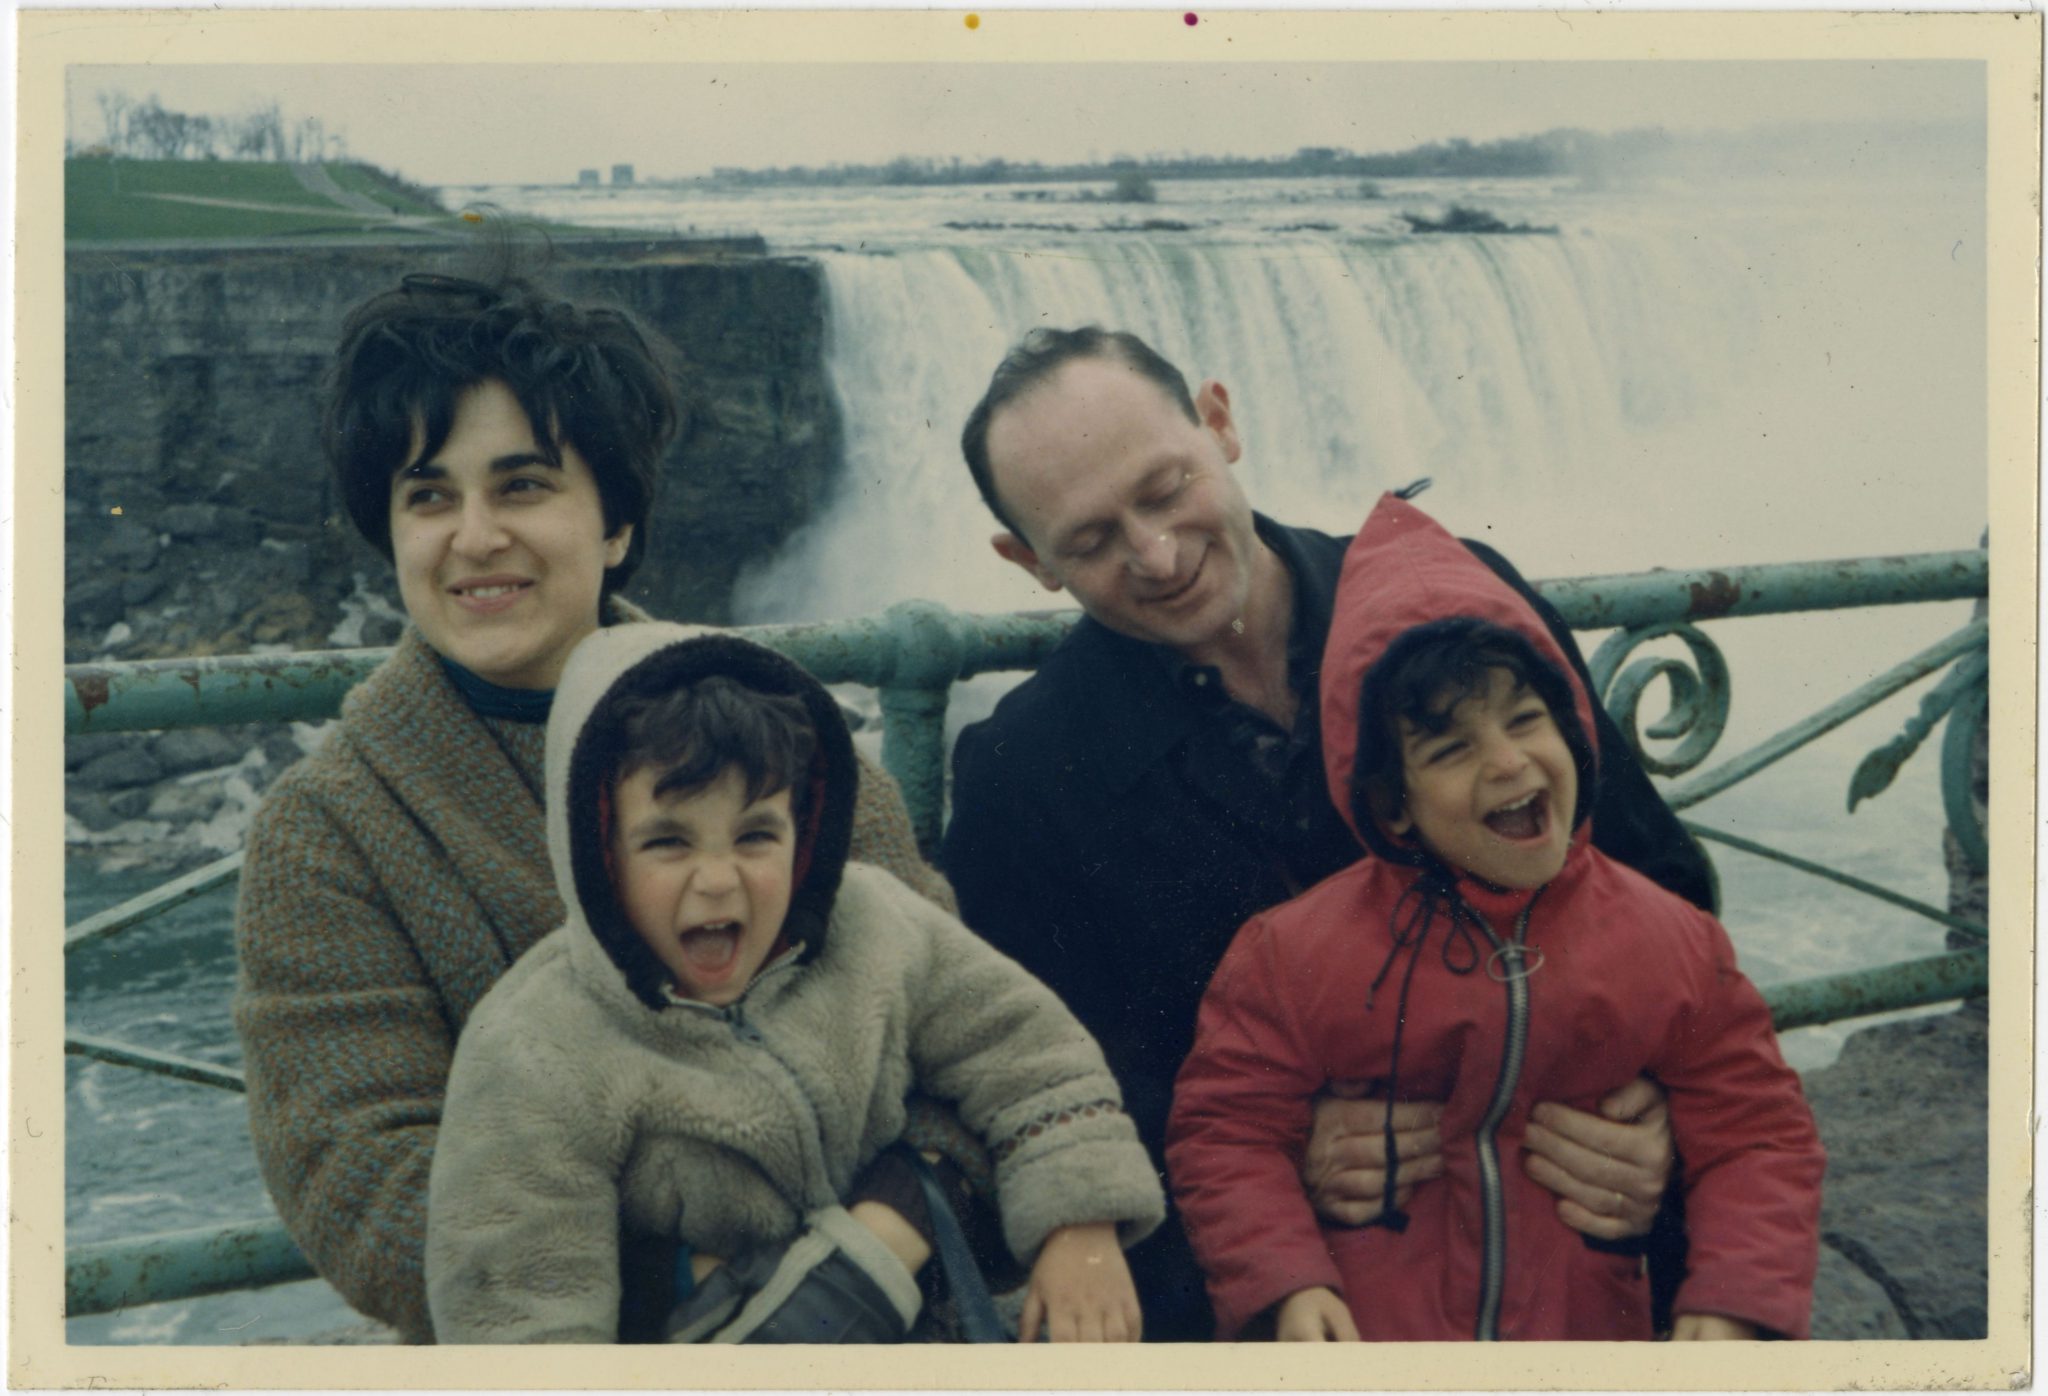 Skuy family at Niagra Falls